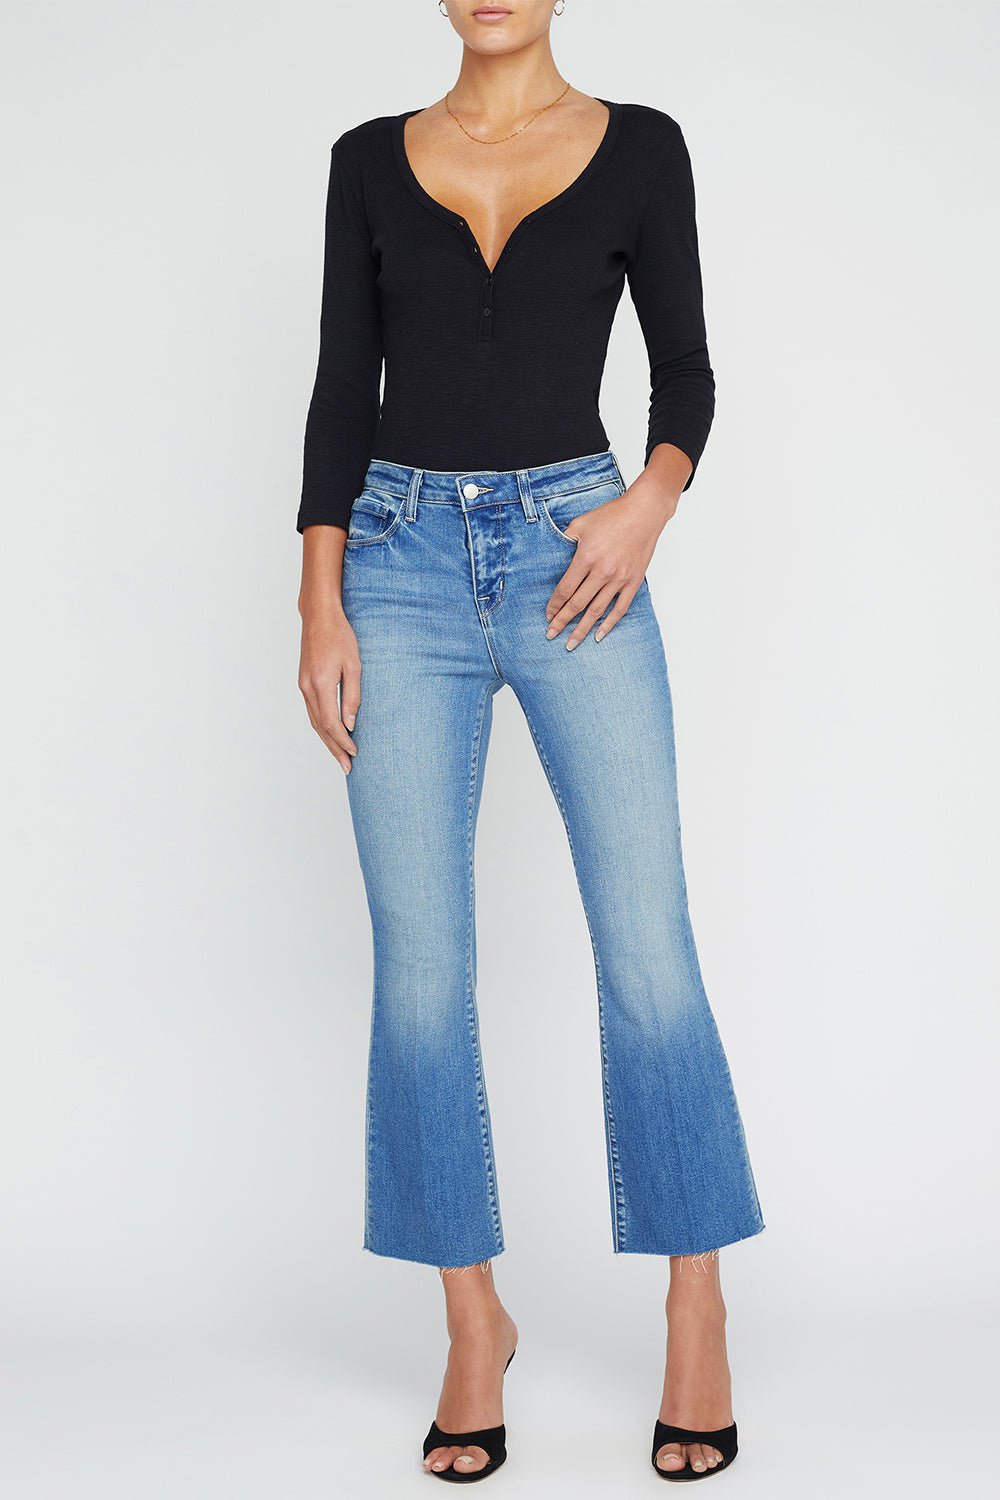 Express Womens Eva Fit & Flare Jeans Size 8 R (32x31.5) Blue Dark Wash  Stretch | eBay